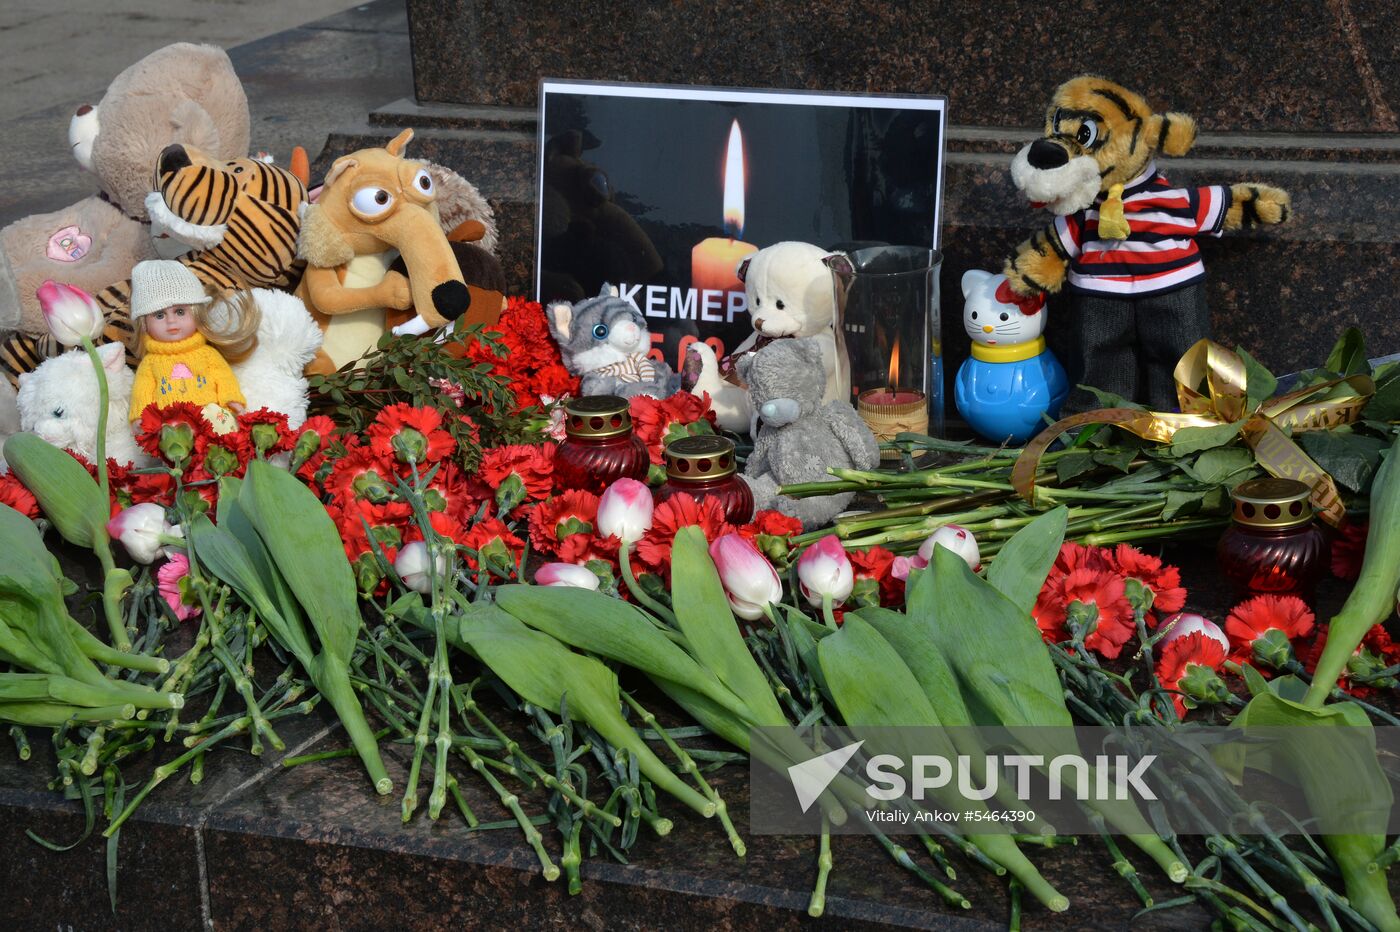 Events in memory of those killed in Zimnyaya Vishnya shopping mall fire